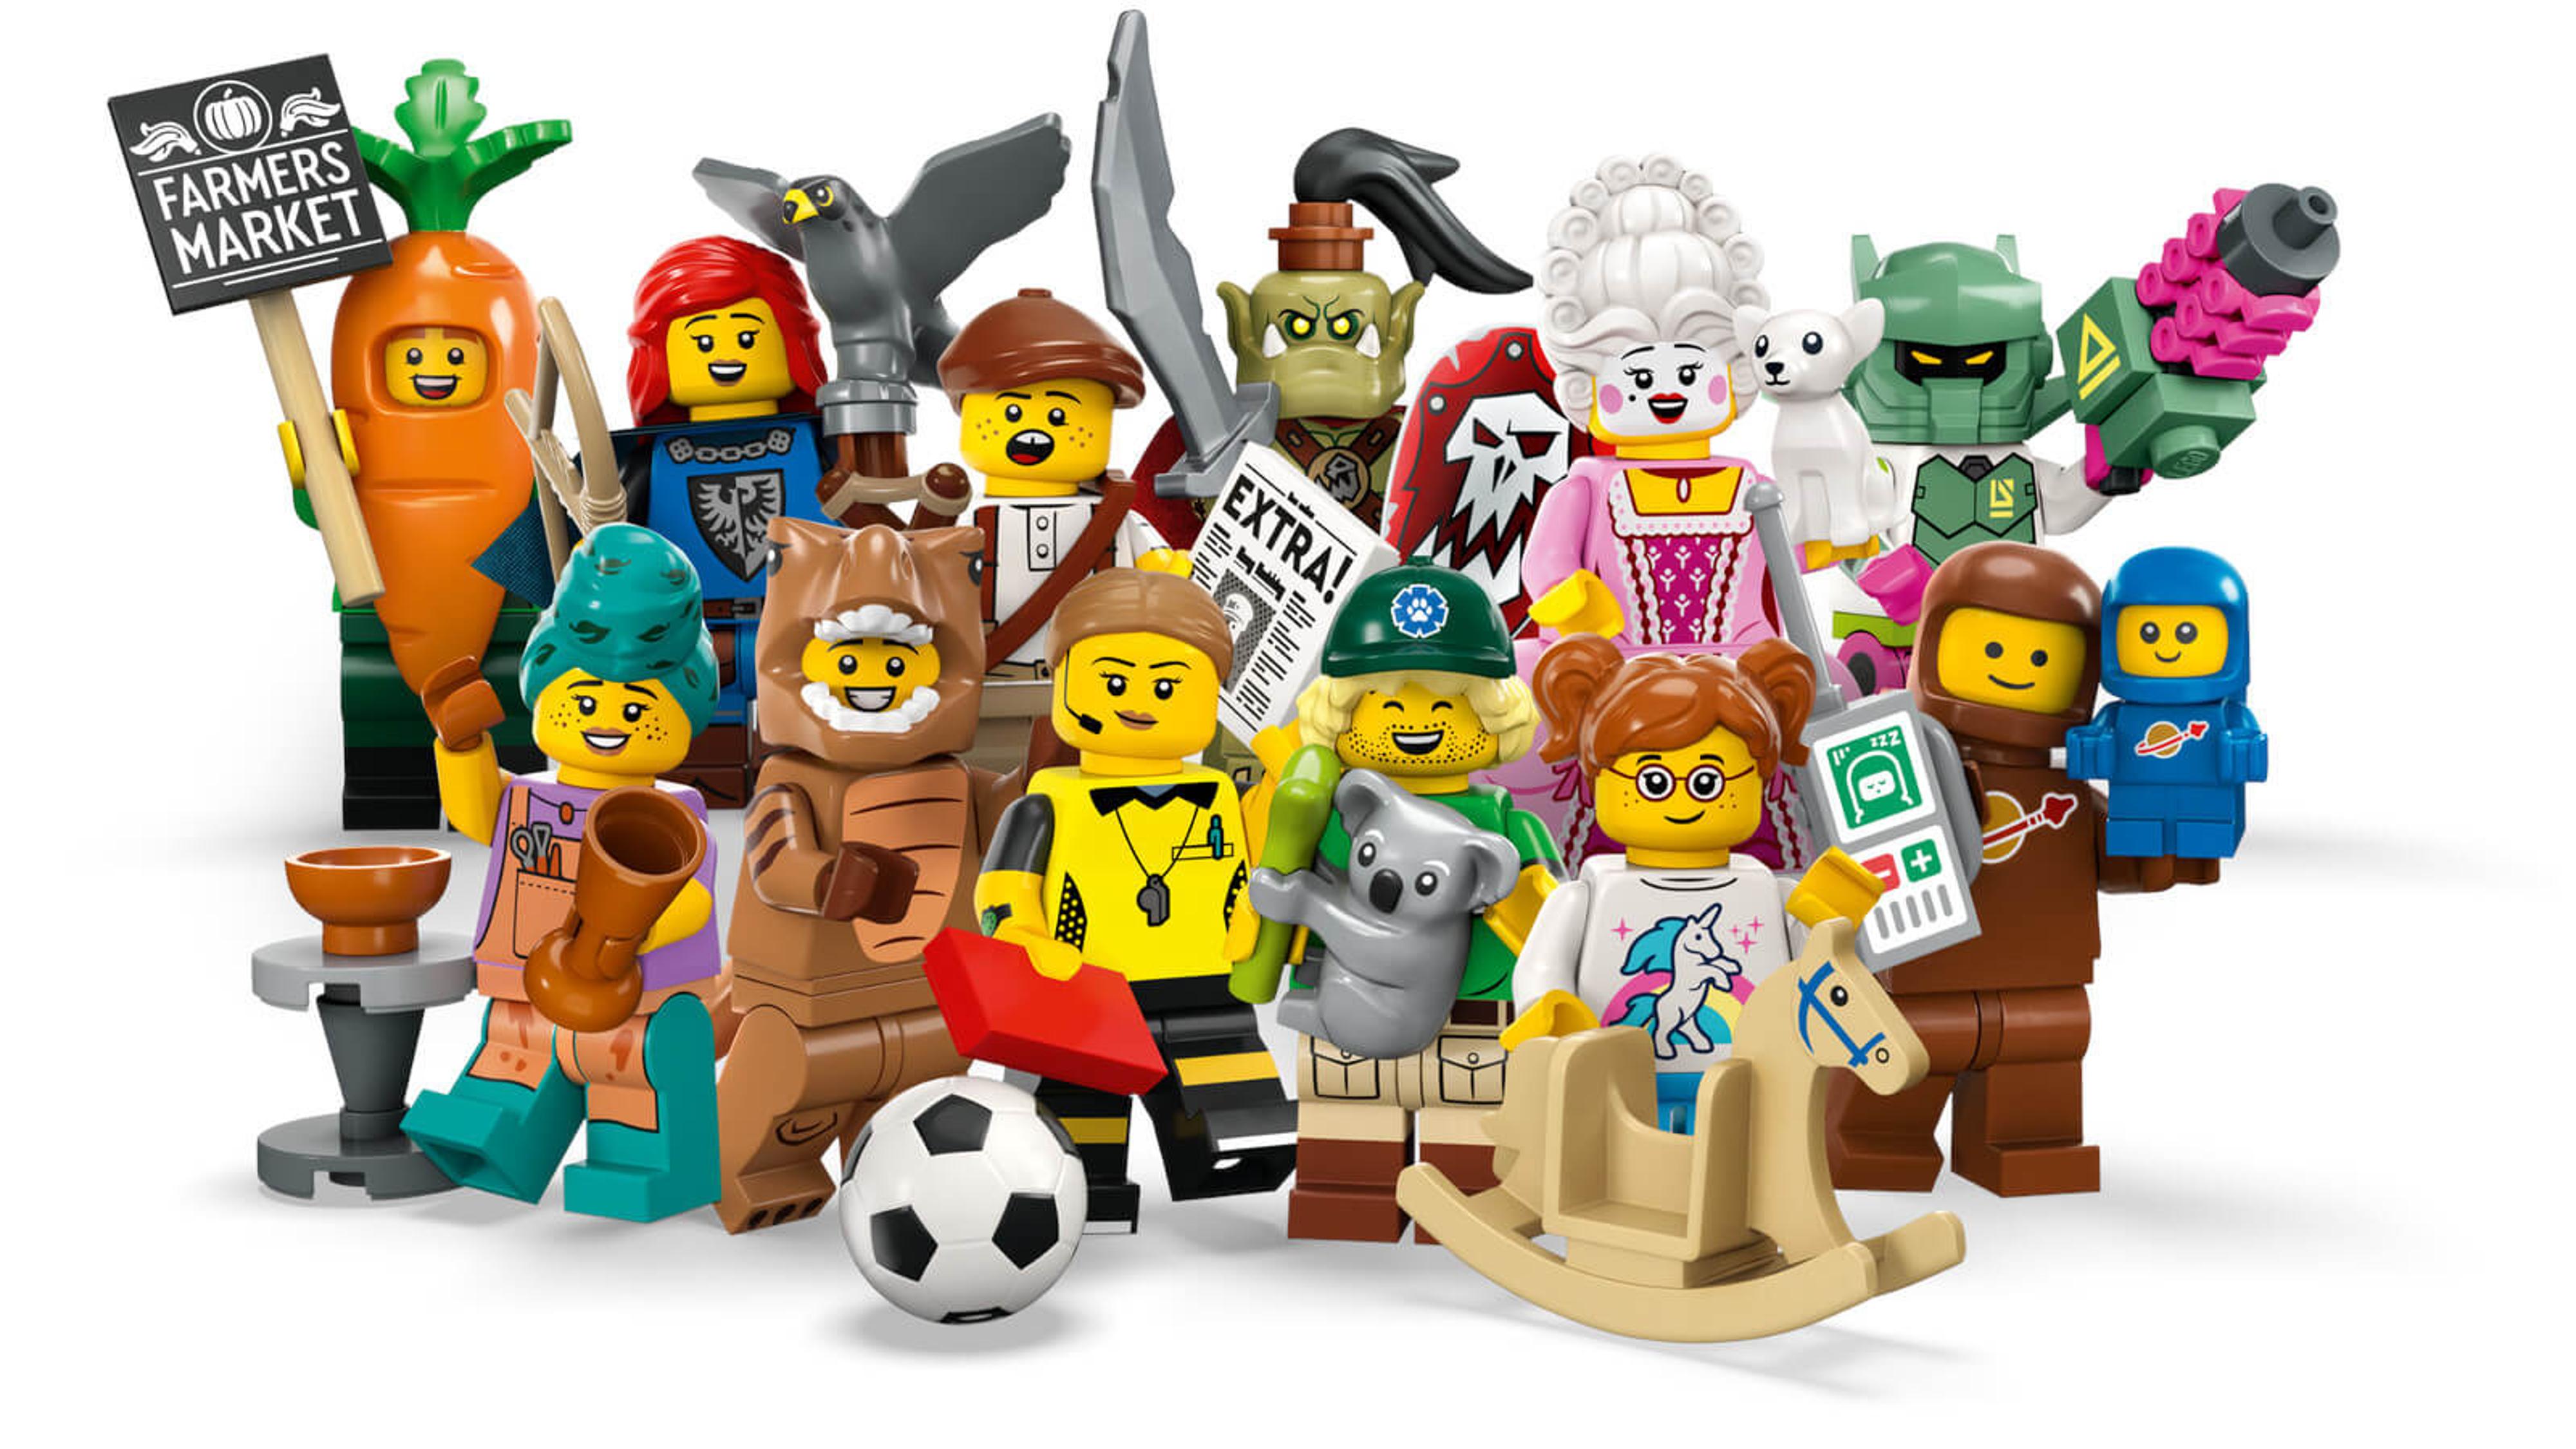 LEGO Minifigures Series 24